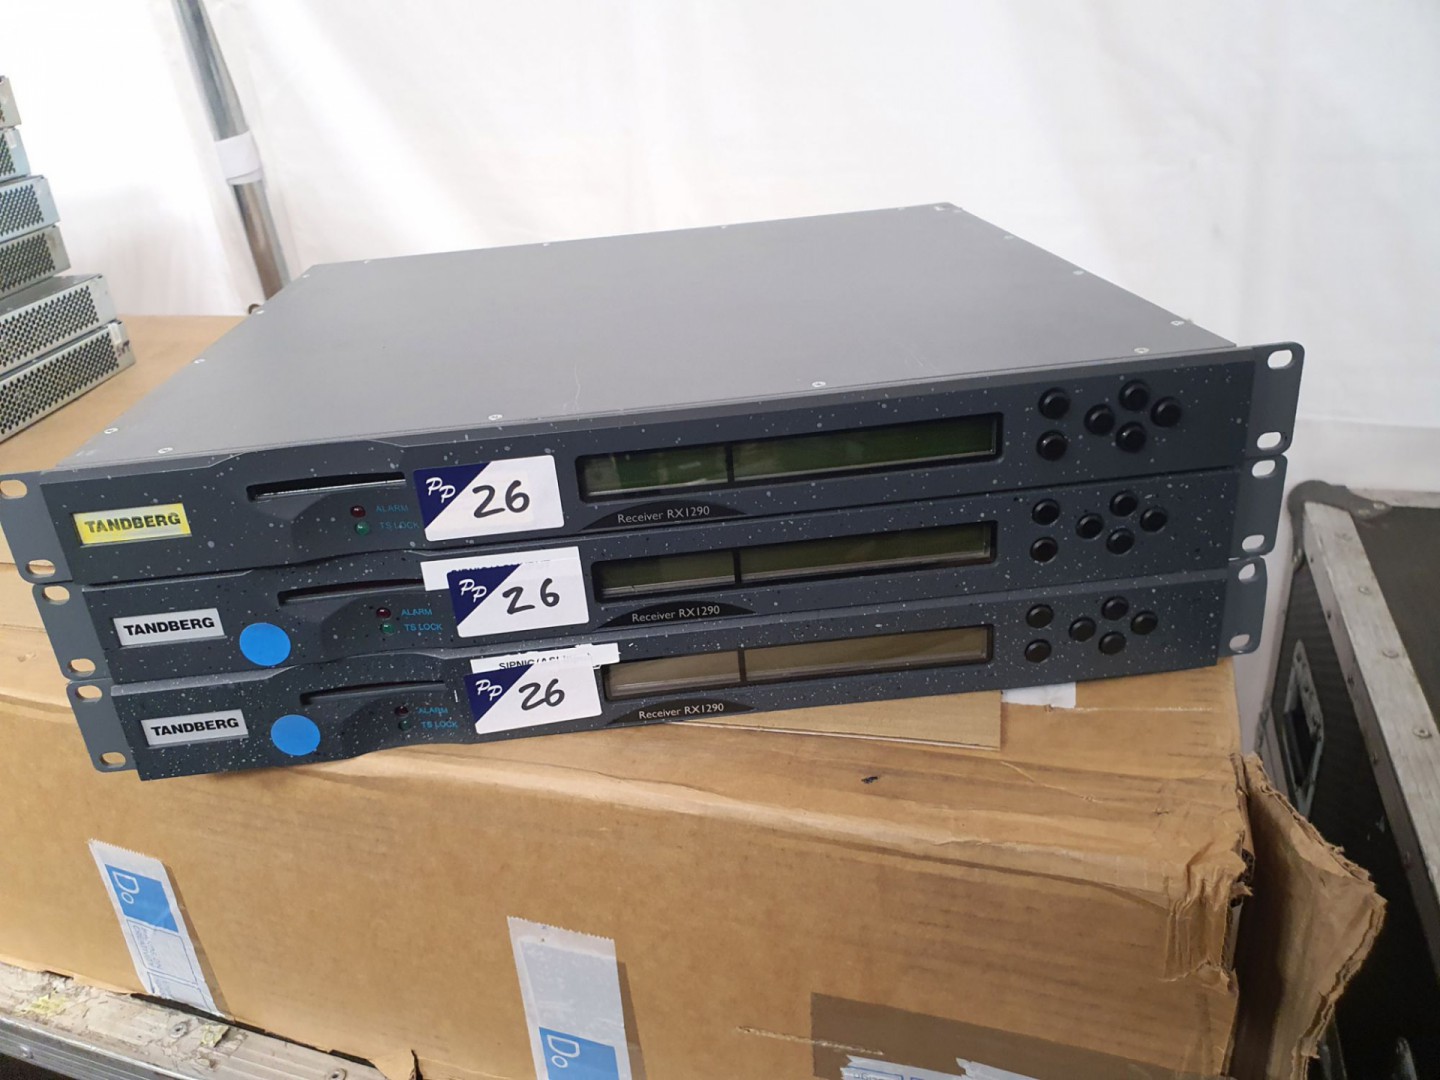 3x Tandberg RX1290 receivers